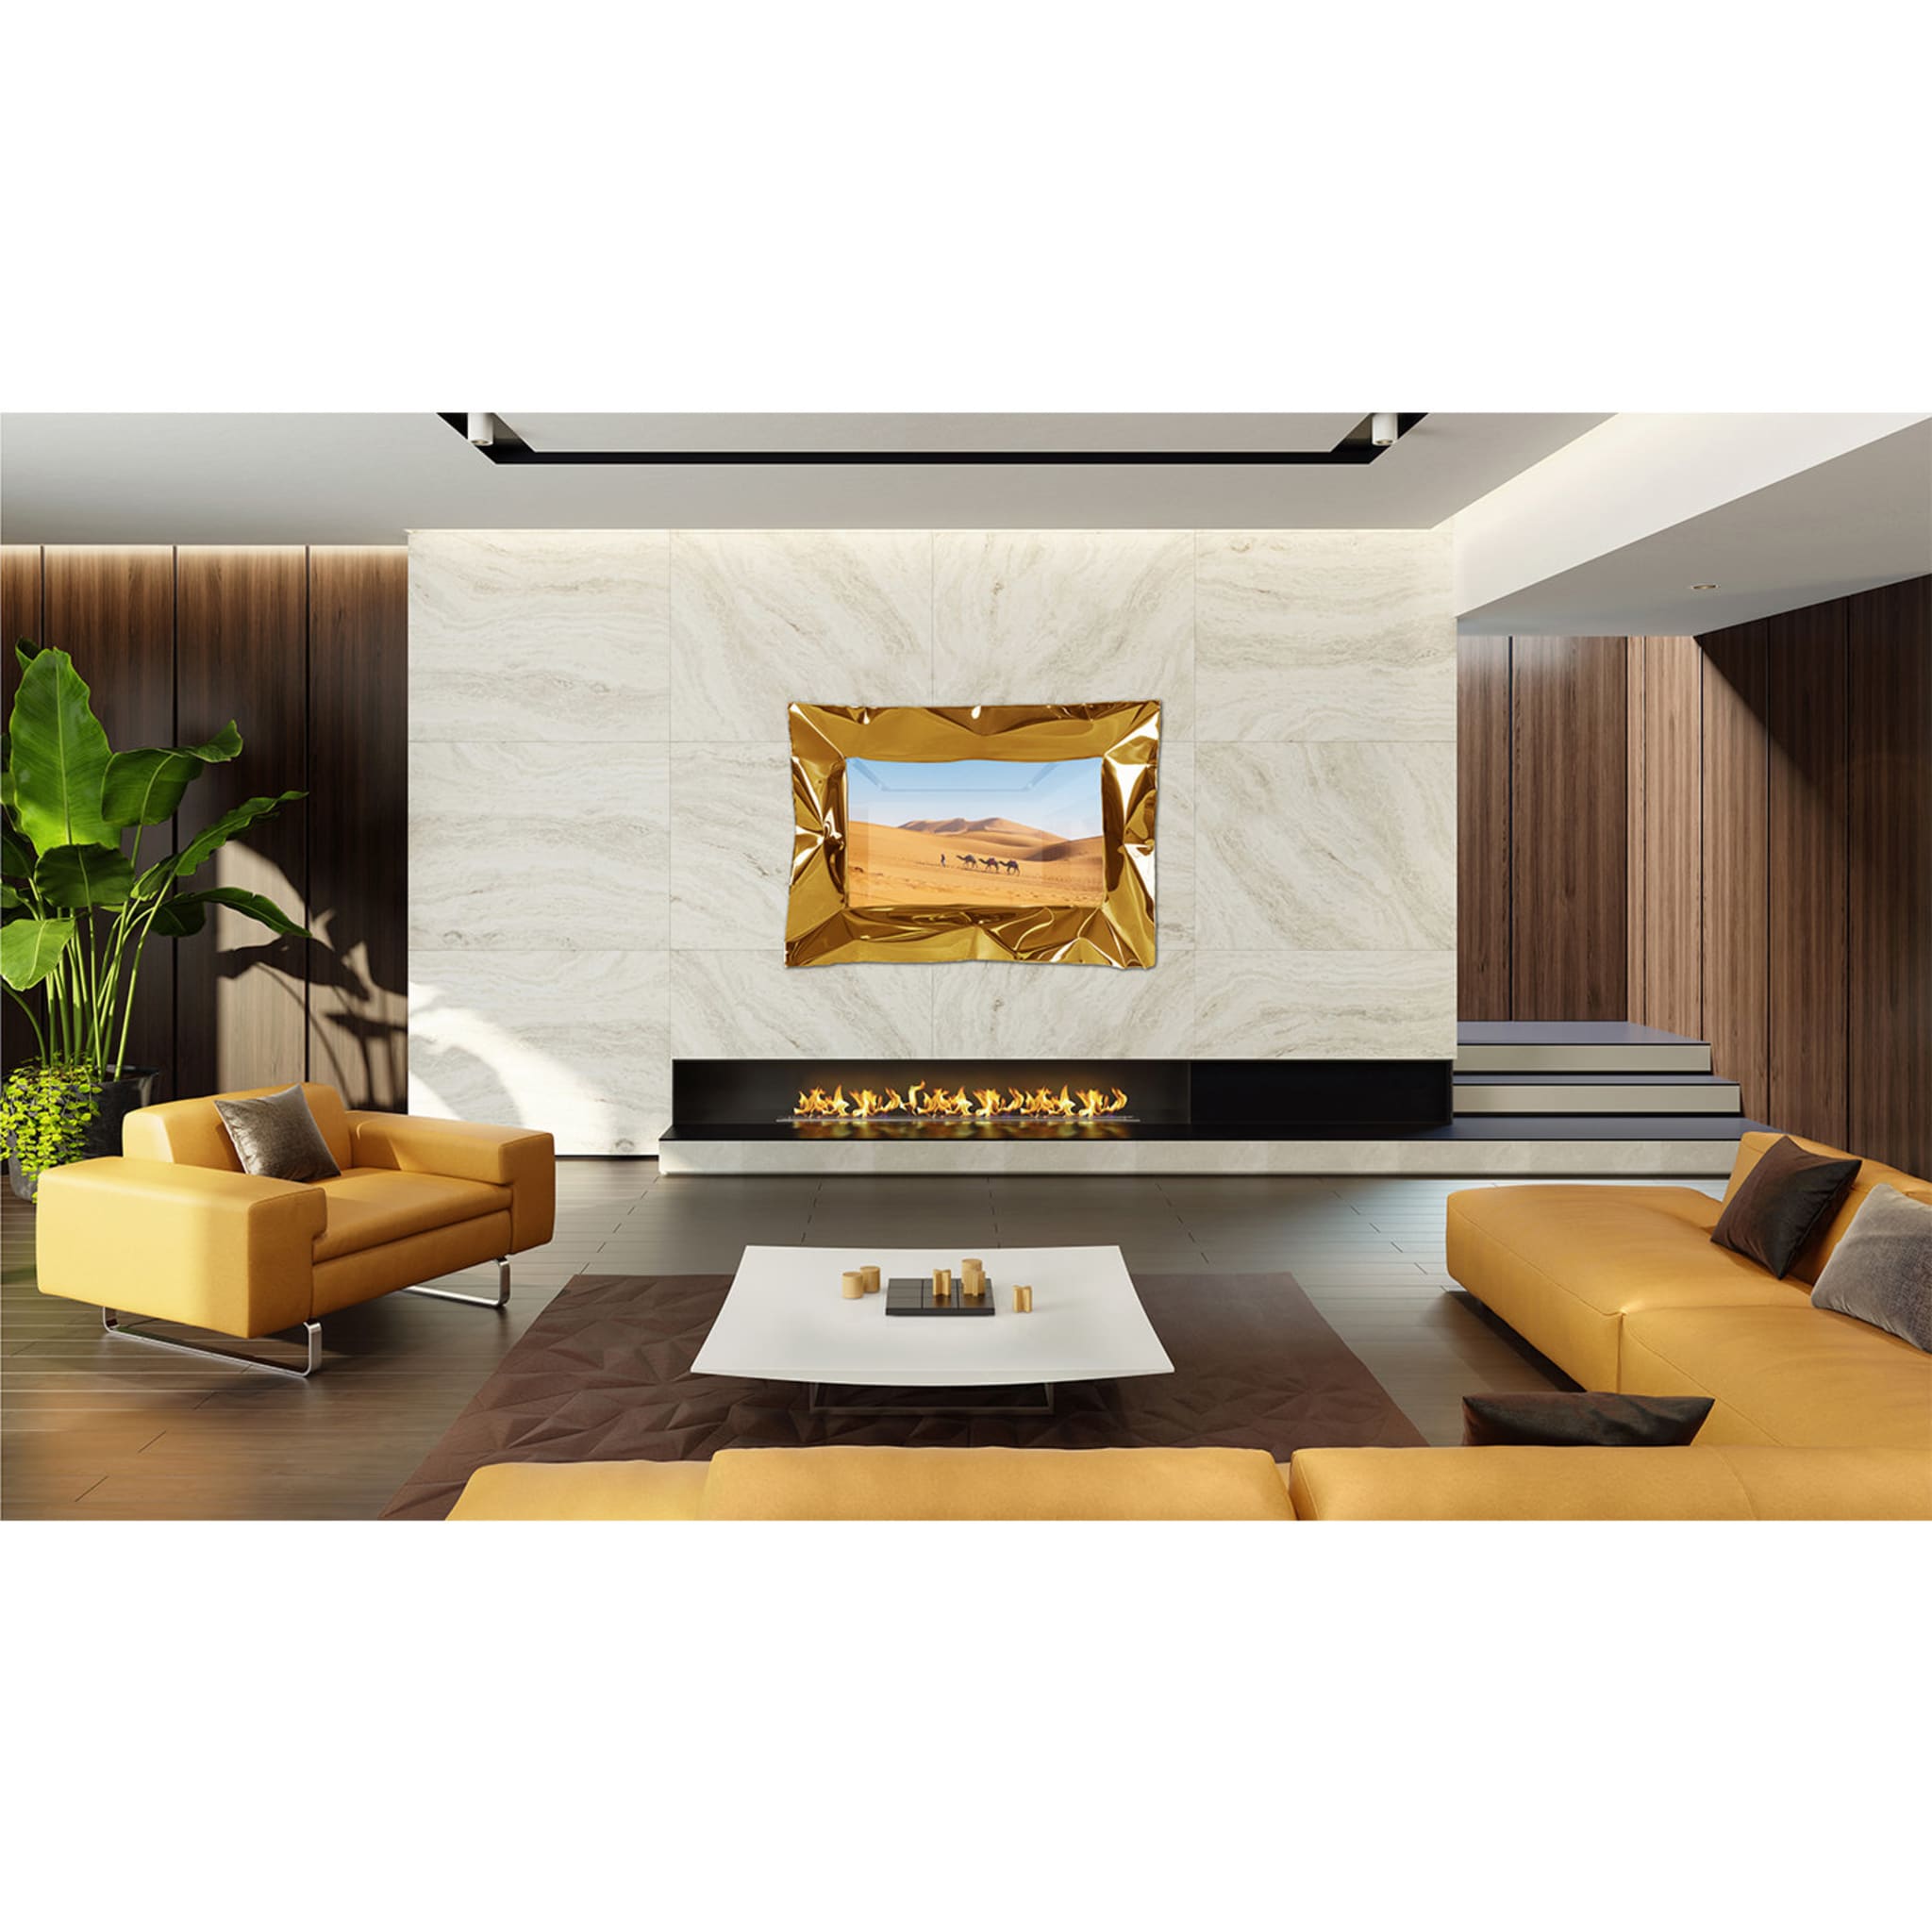 Lux Gold Mirror TV by Marco Mazzei - Alternative view 1